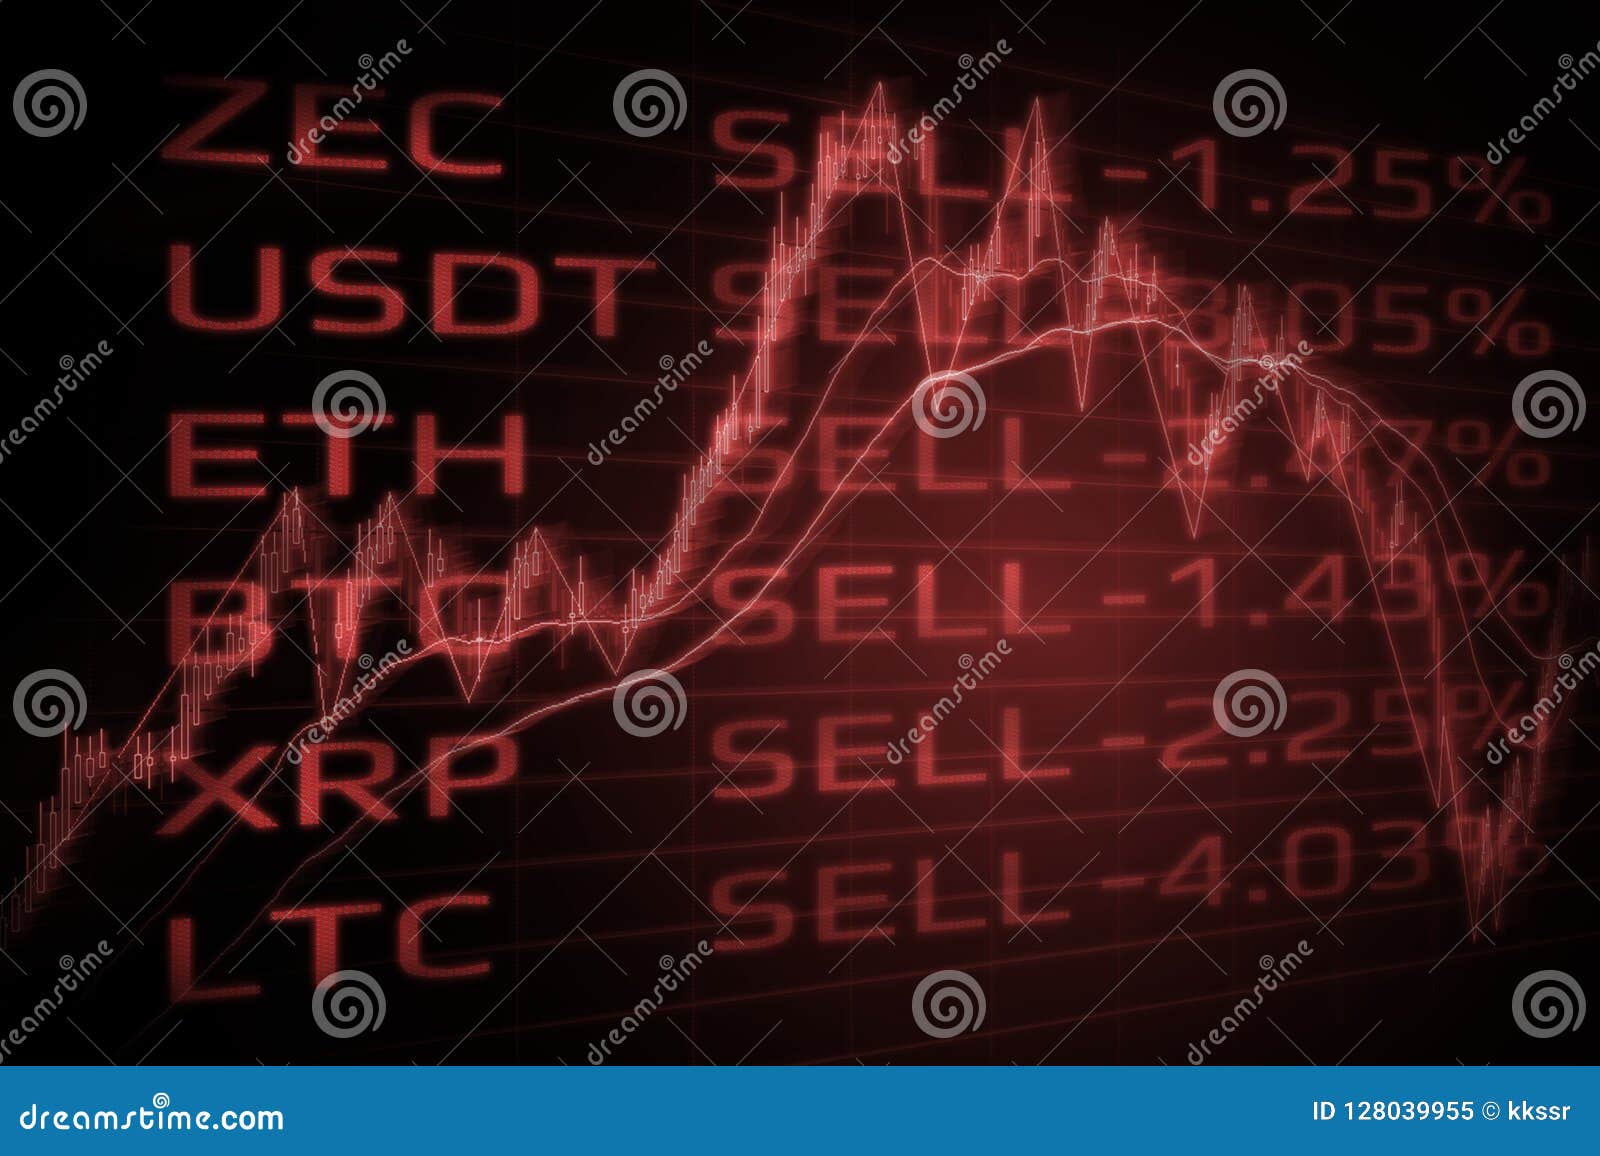 cryptocurrencies news panic sale